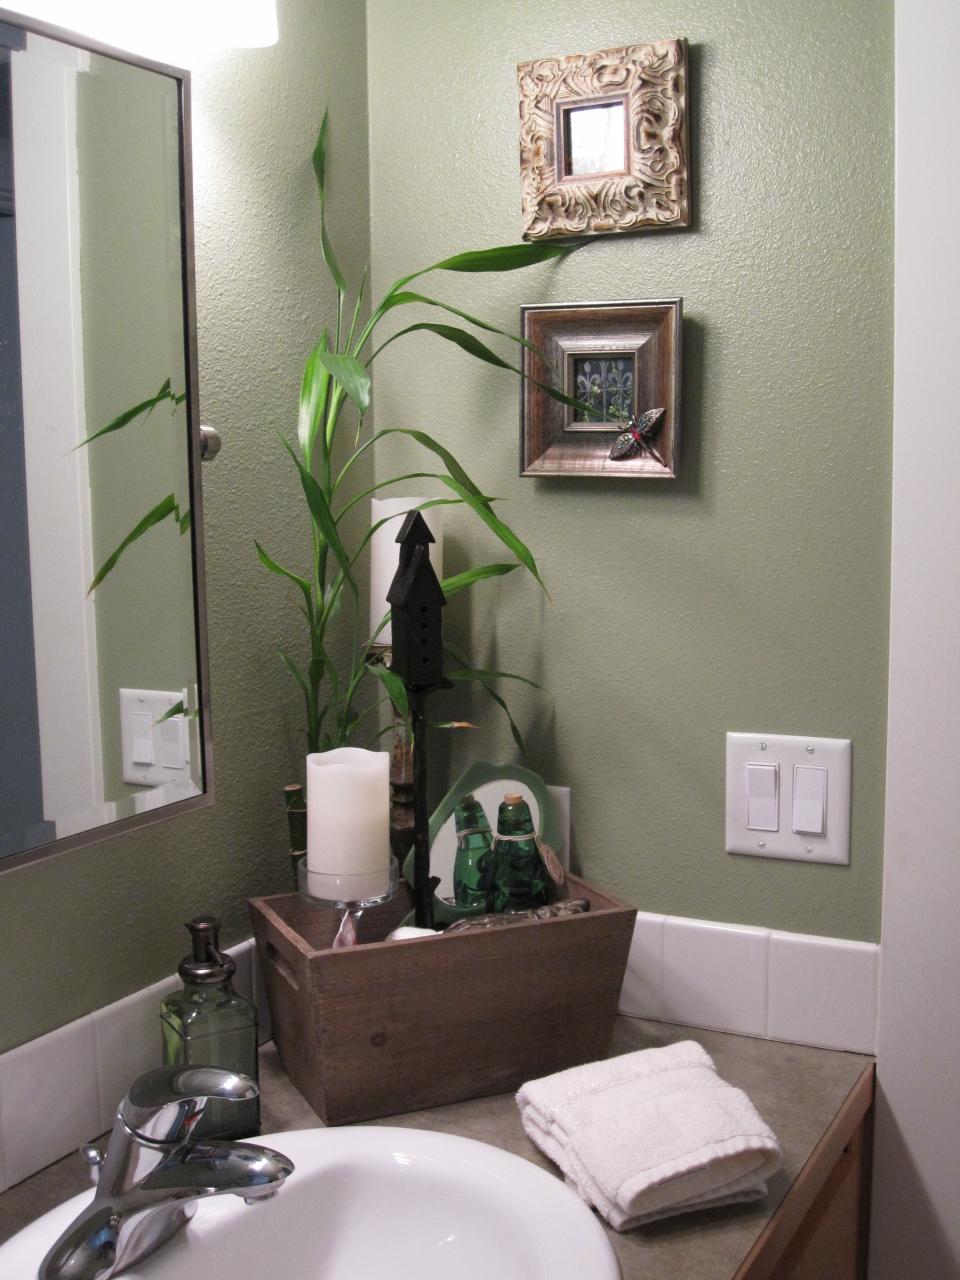 A Simple Guide To Fresh Green Bathroom Ideas Pinterest IJ20k1 https